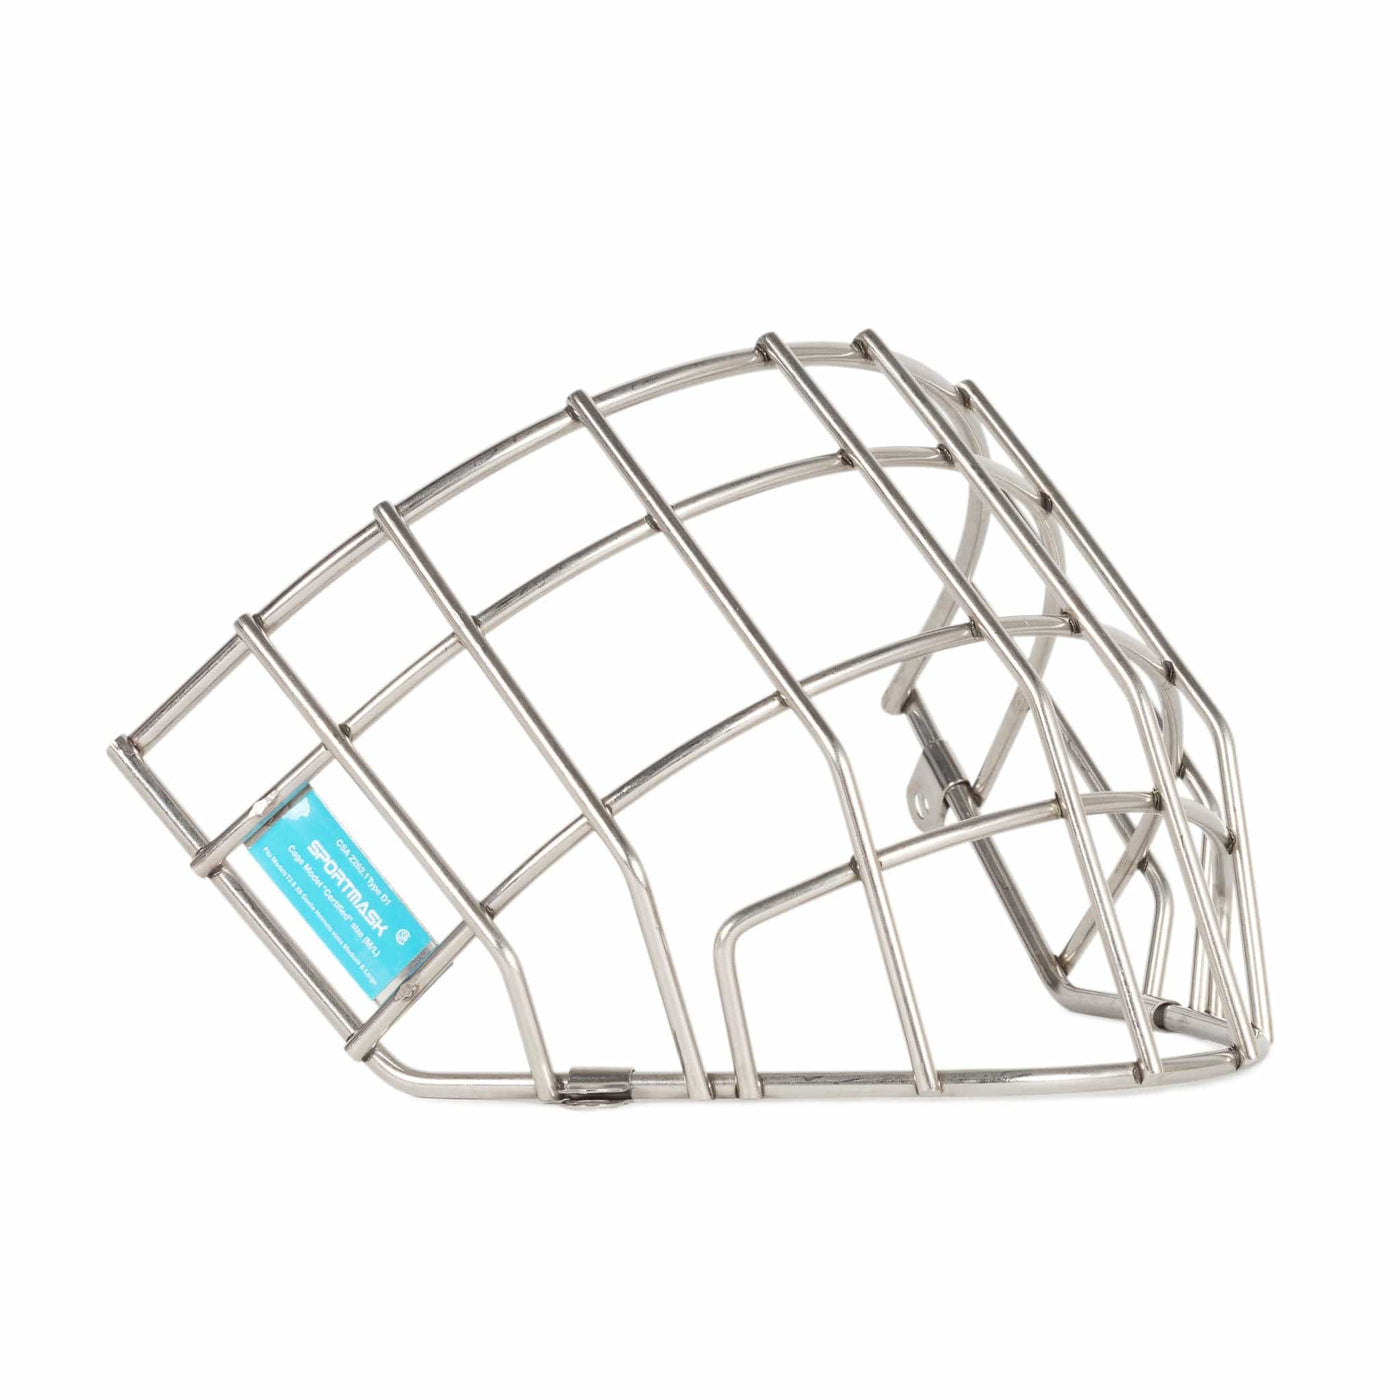 Sportmask X8/T3 Goalie Cage - Chrome